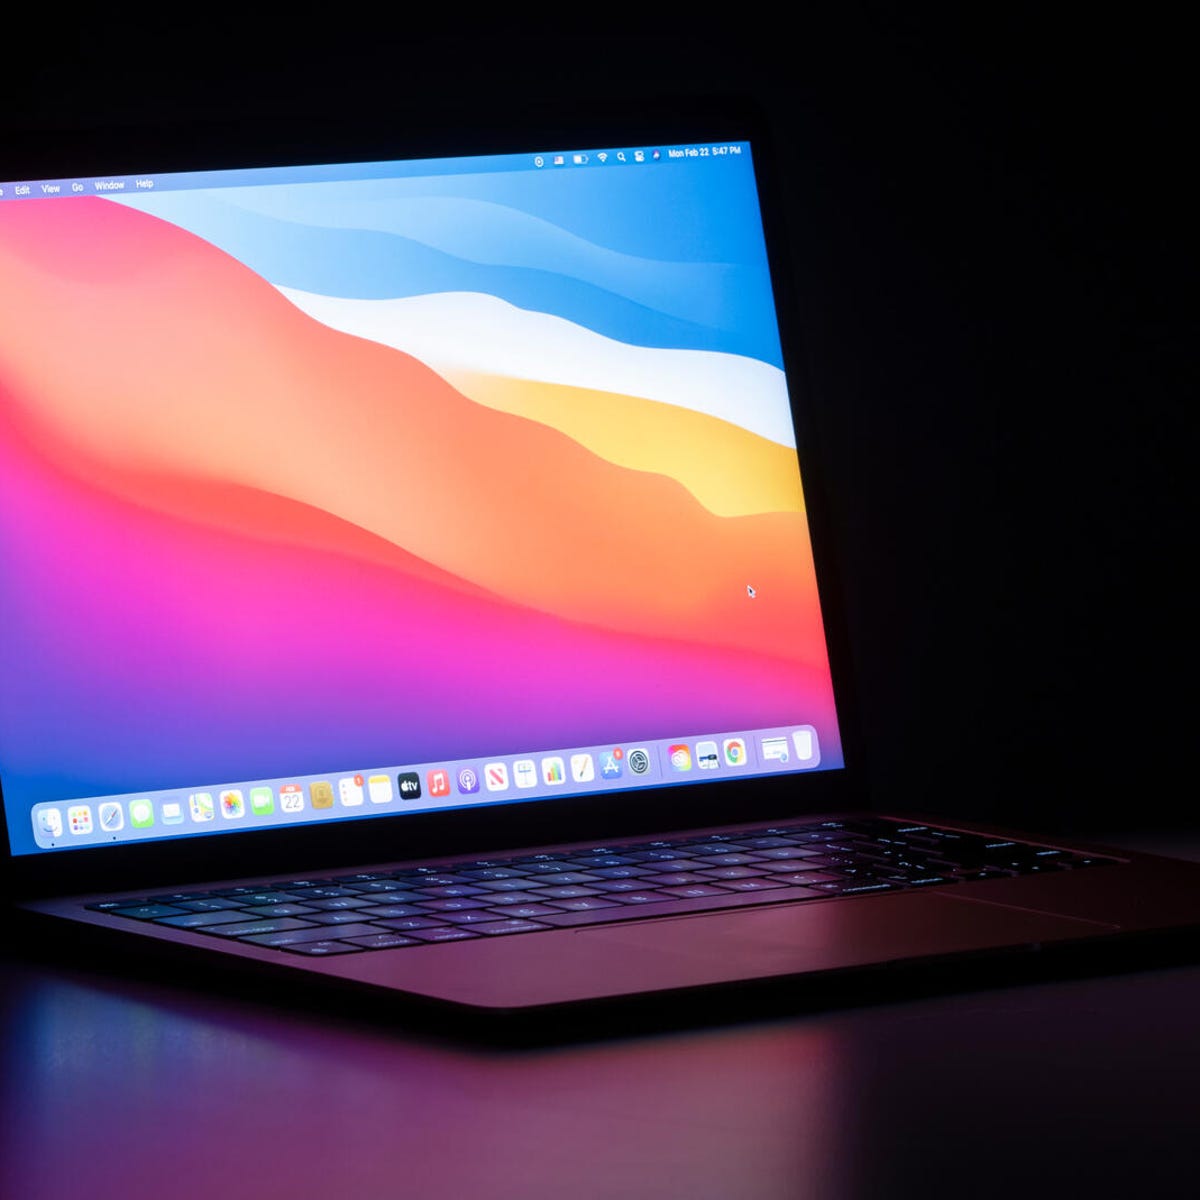 MacBook Pro 13-Inch Vs MacBook Air 2020: Price, Performance, Specs